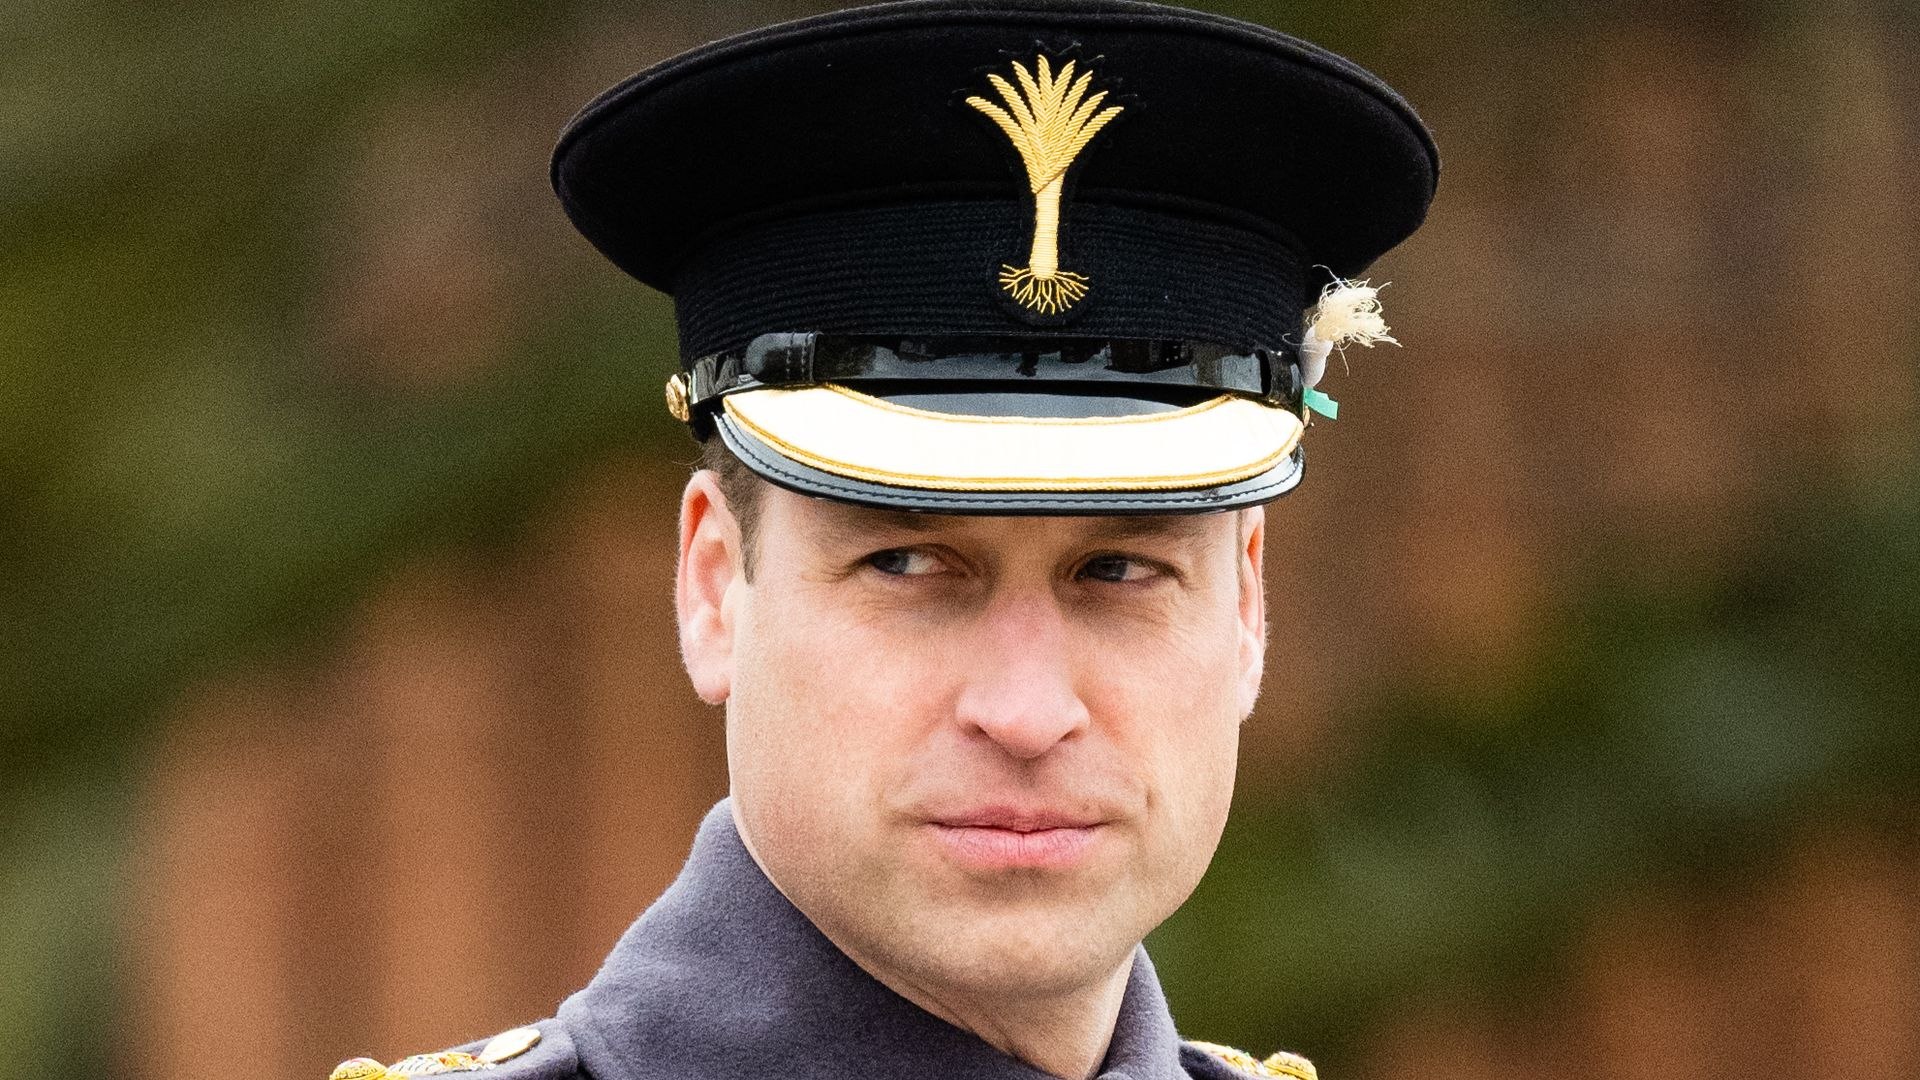 Prince William in grey military uniform